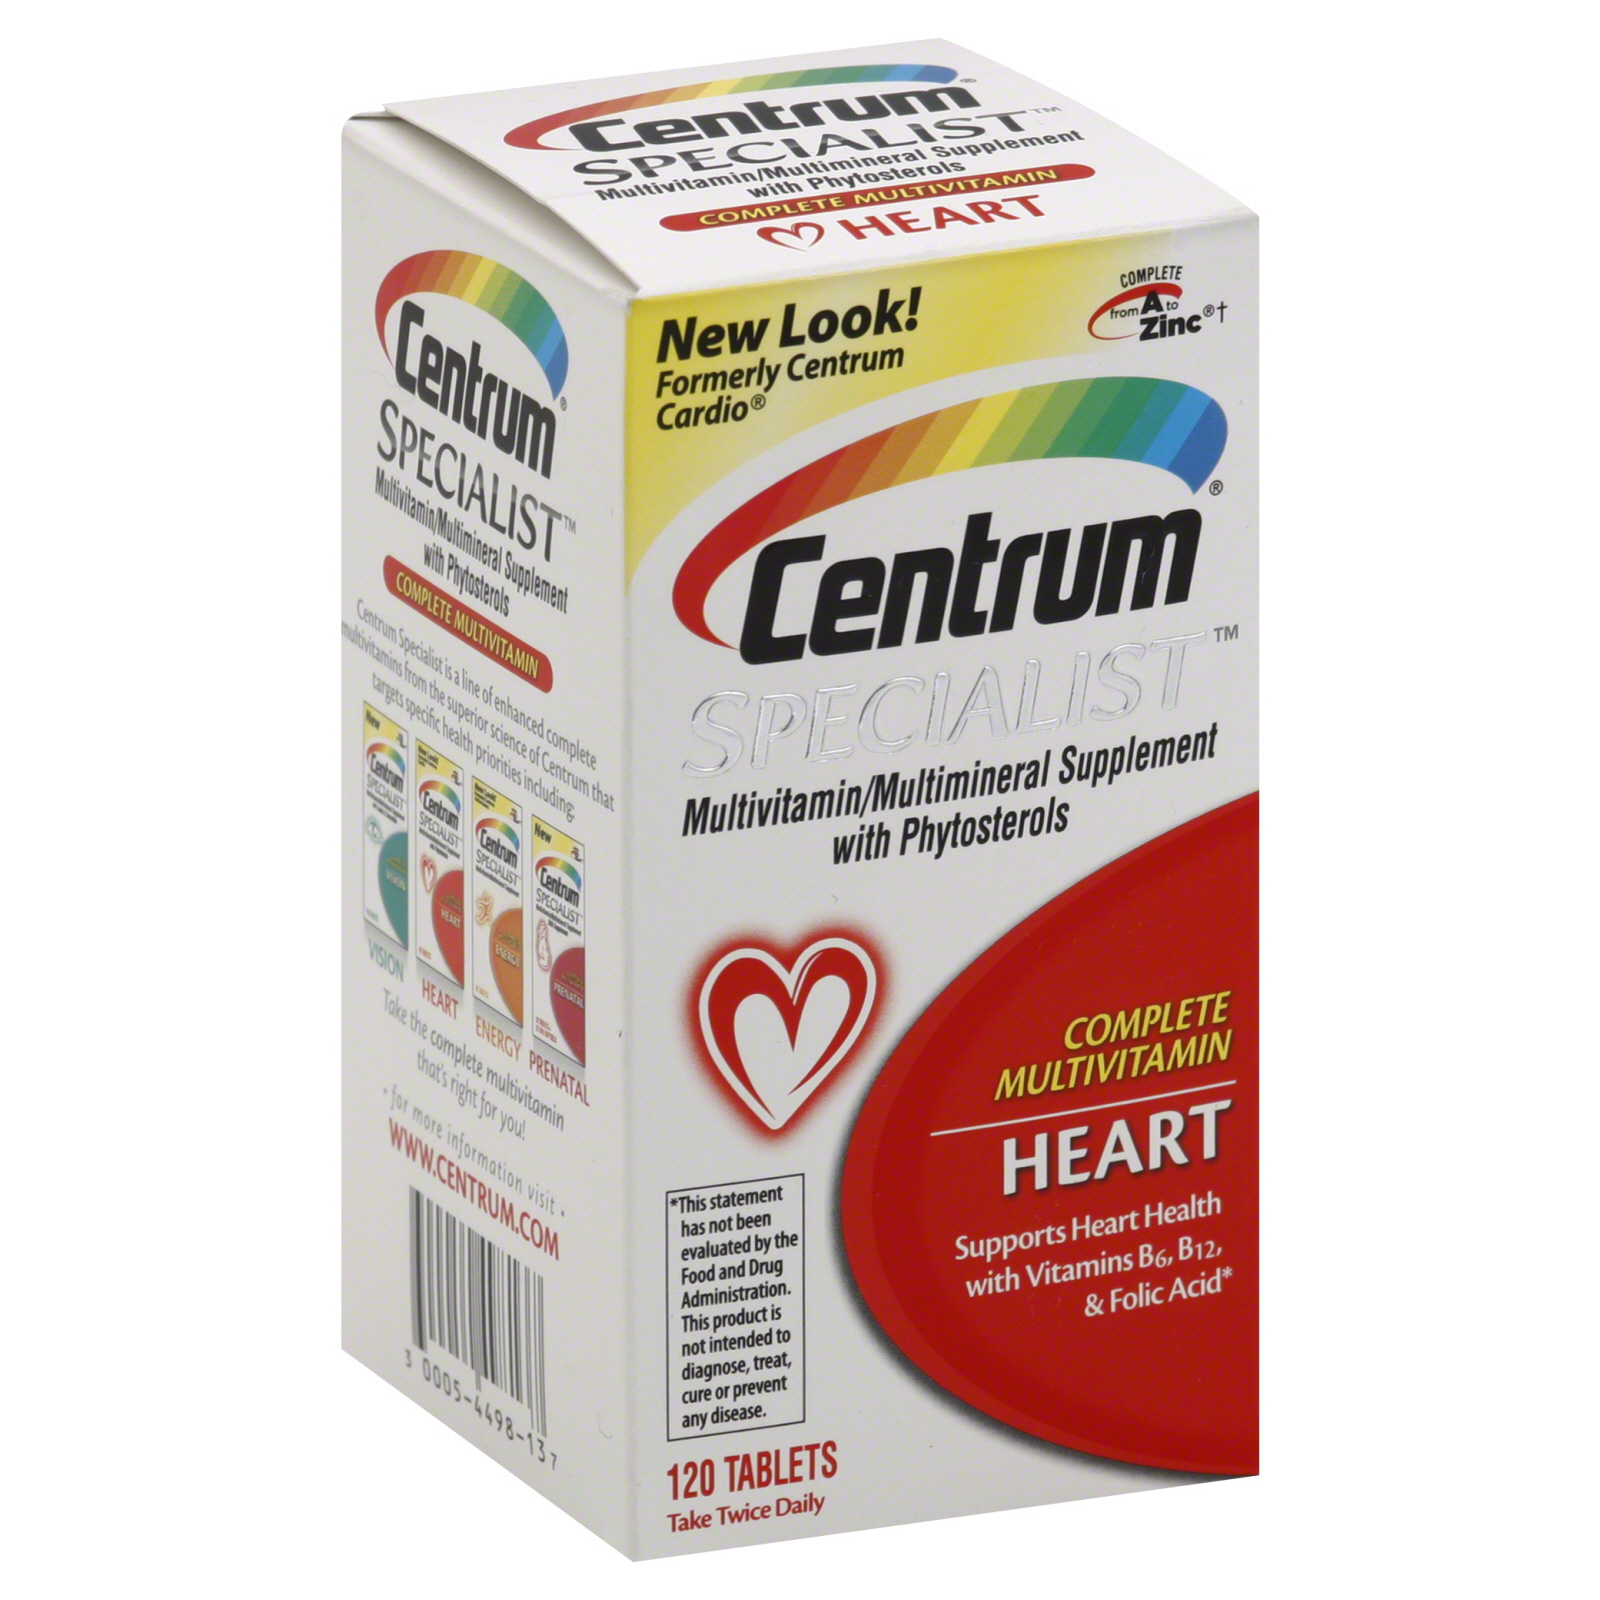 Centrum Specialist Complete Multivitamin, Heart, 120 Tablets